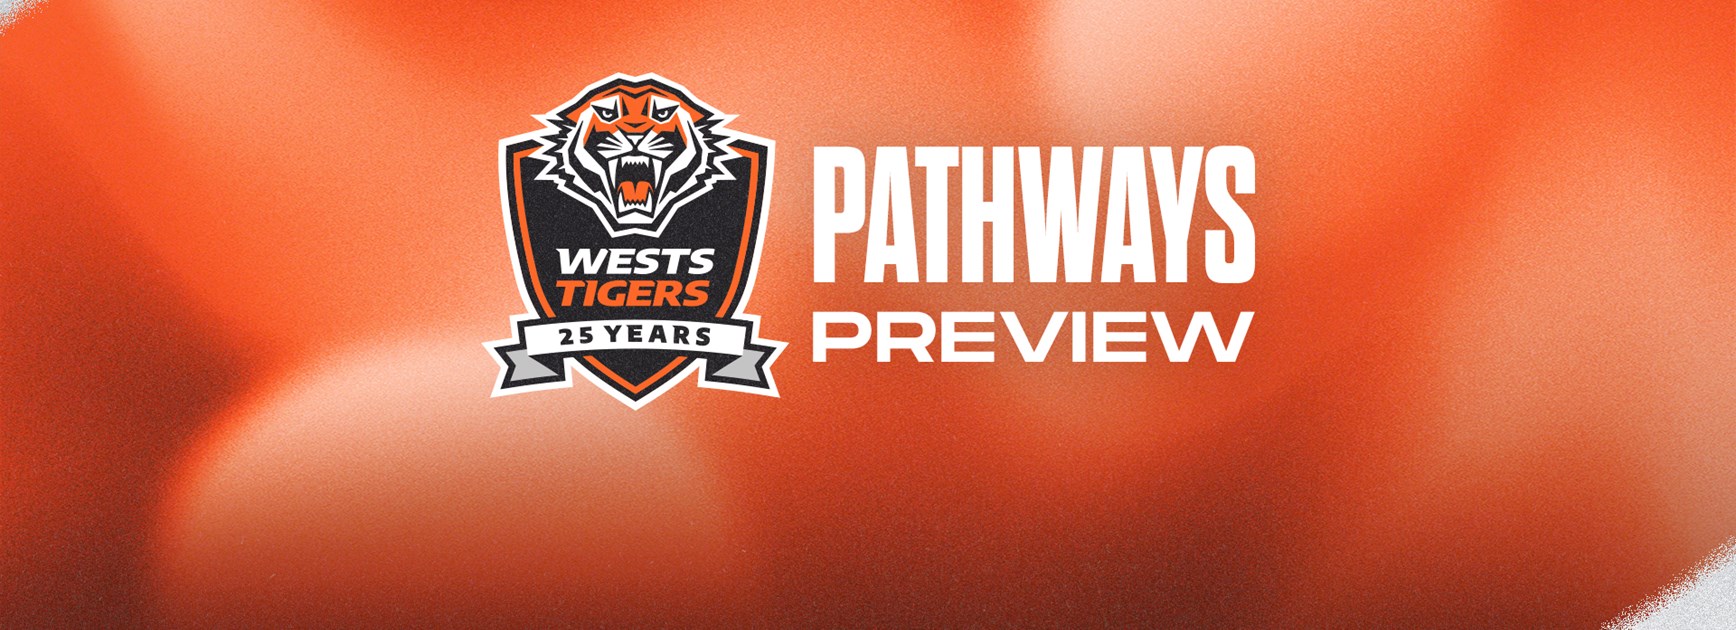 Pathways Preview: Under 17s Grand Finals